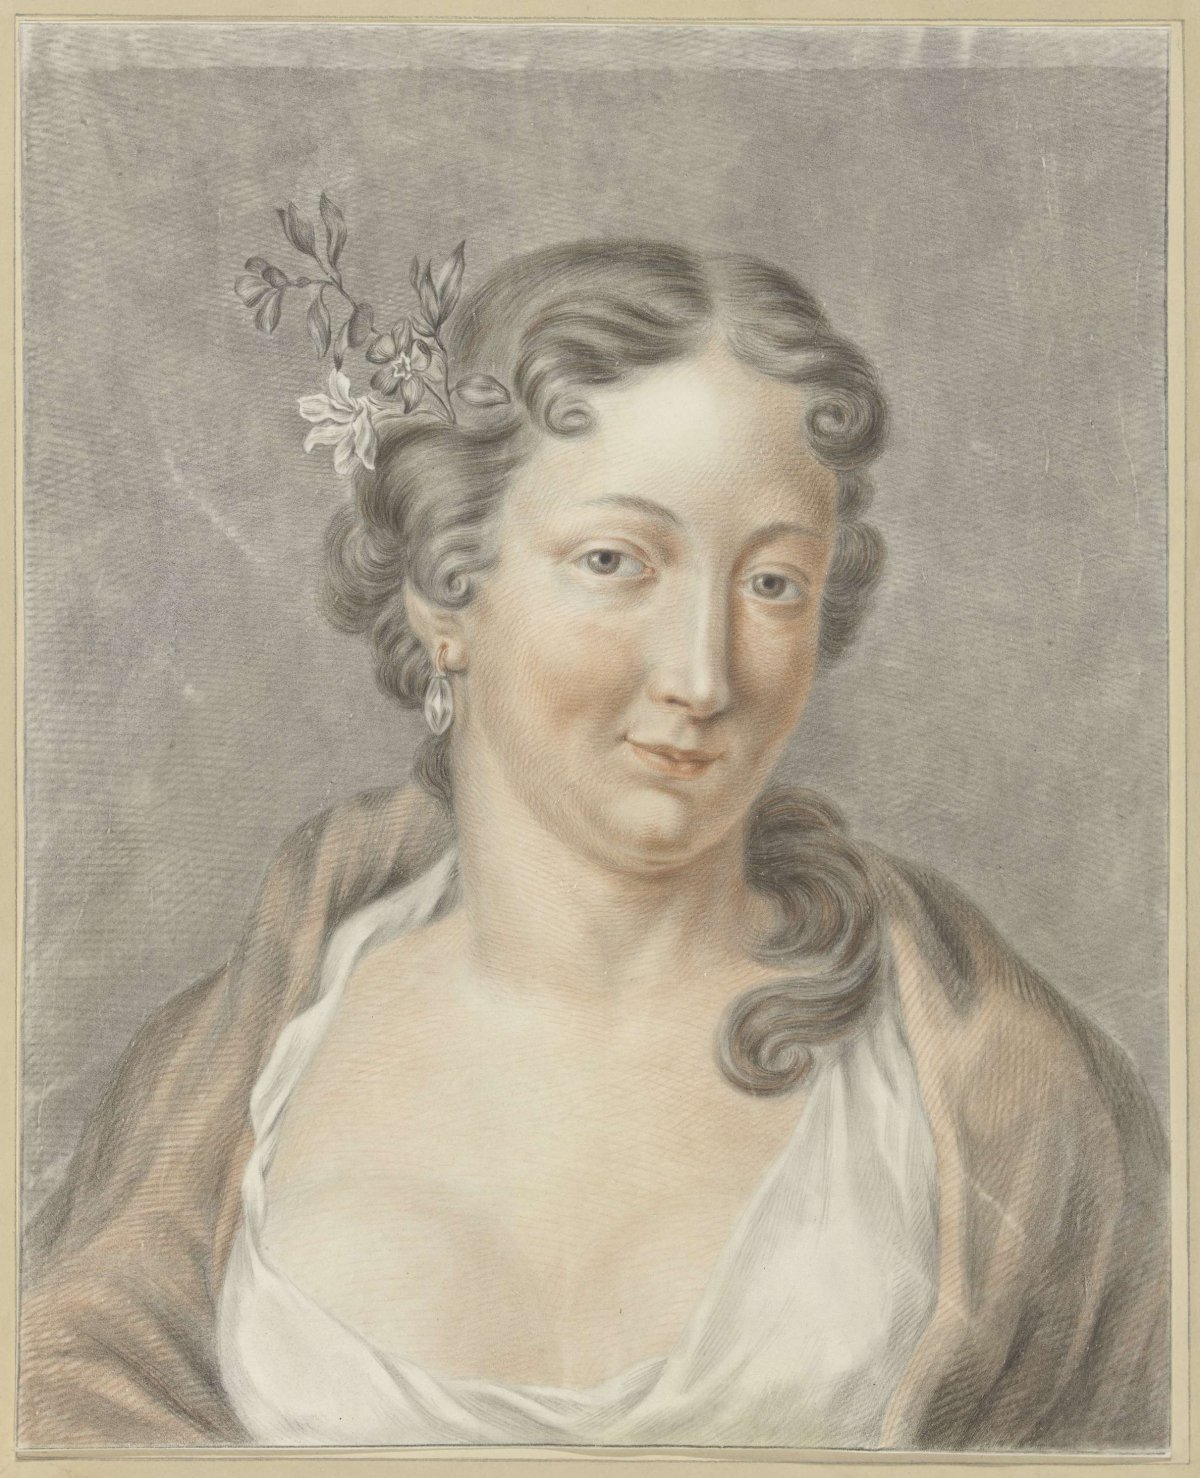 Young woman, Abraham Delfos, 1741 - 1820